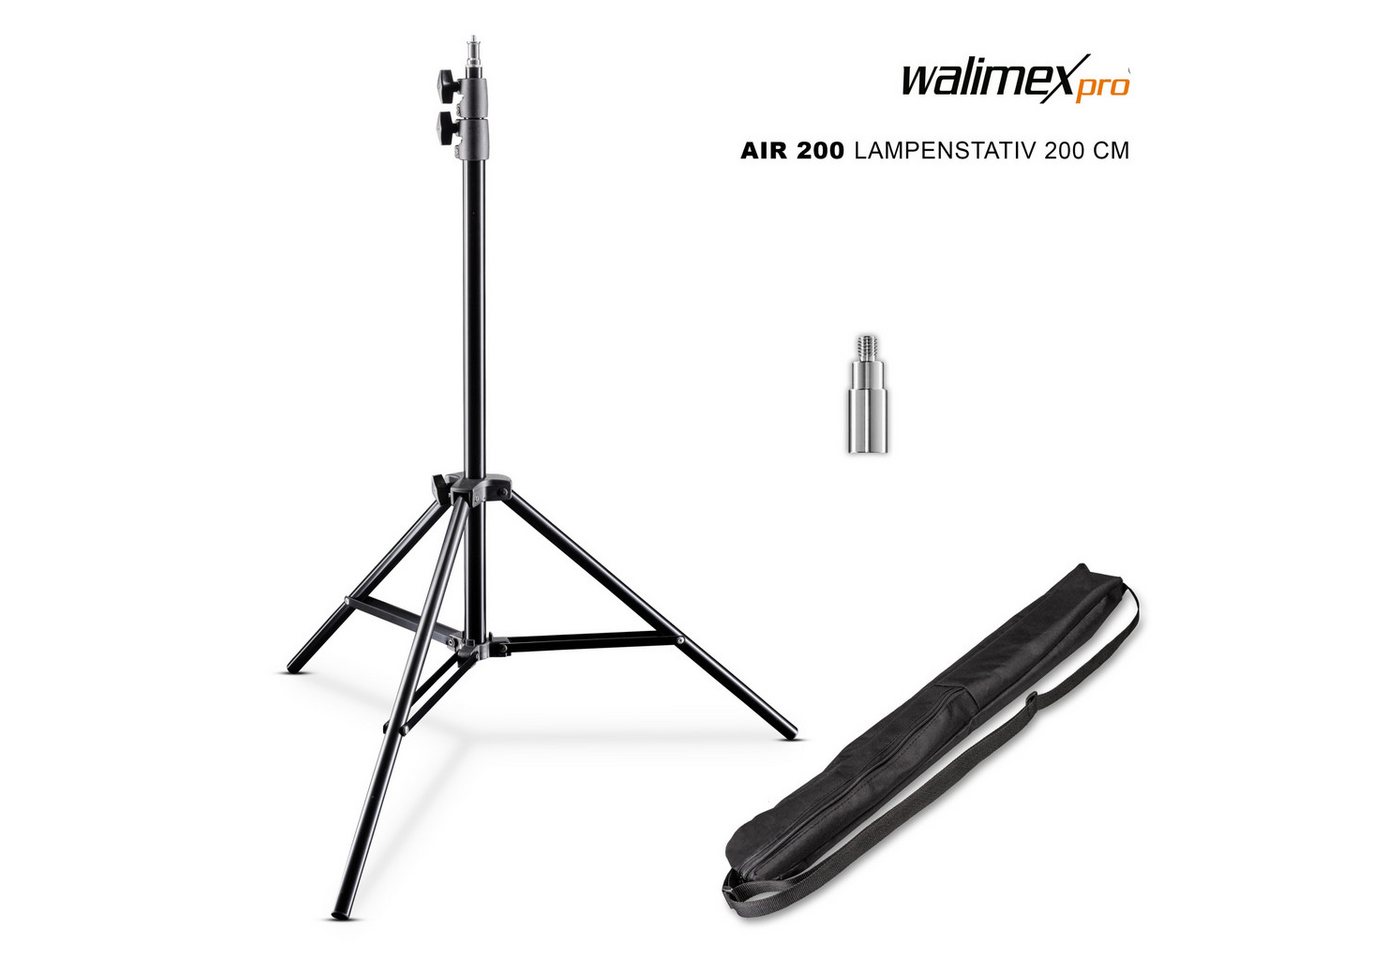 Walimex Pro AIR 200 Lampenstativ 200 cm Lampenstativ von Walimex Pro